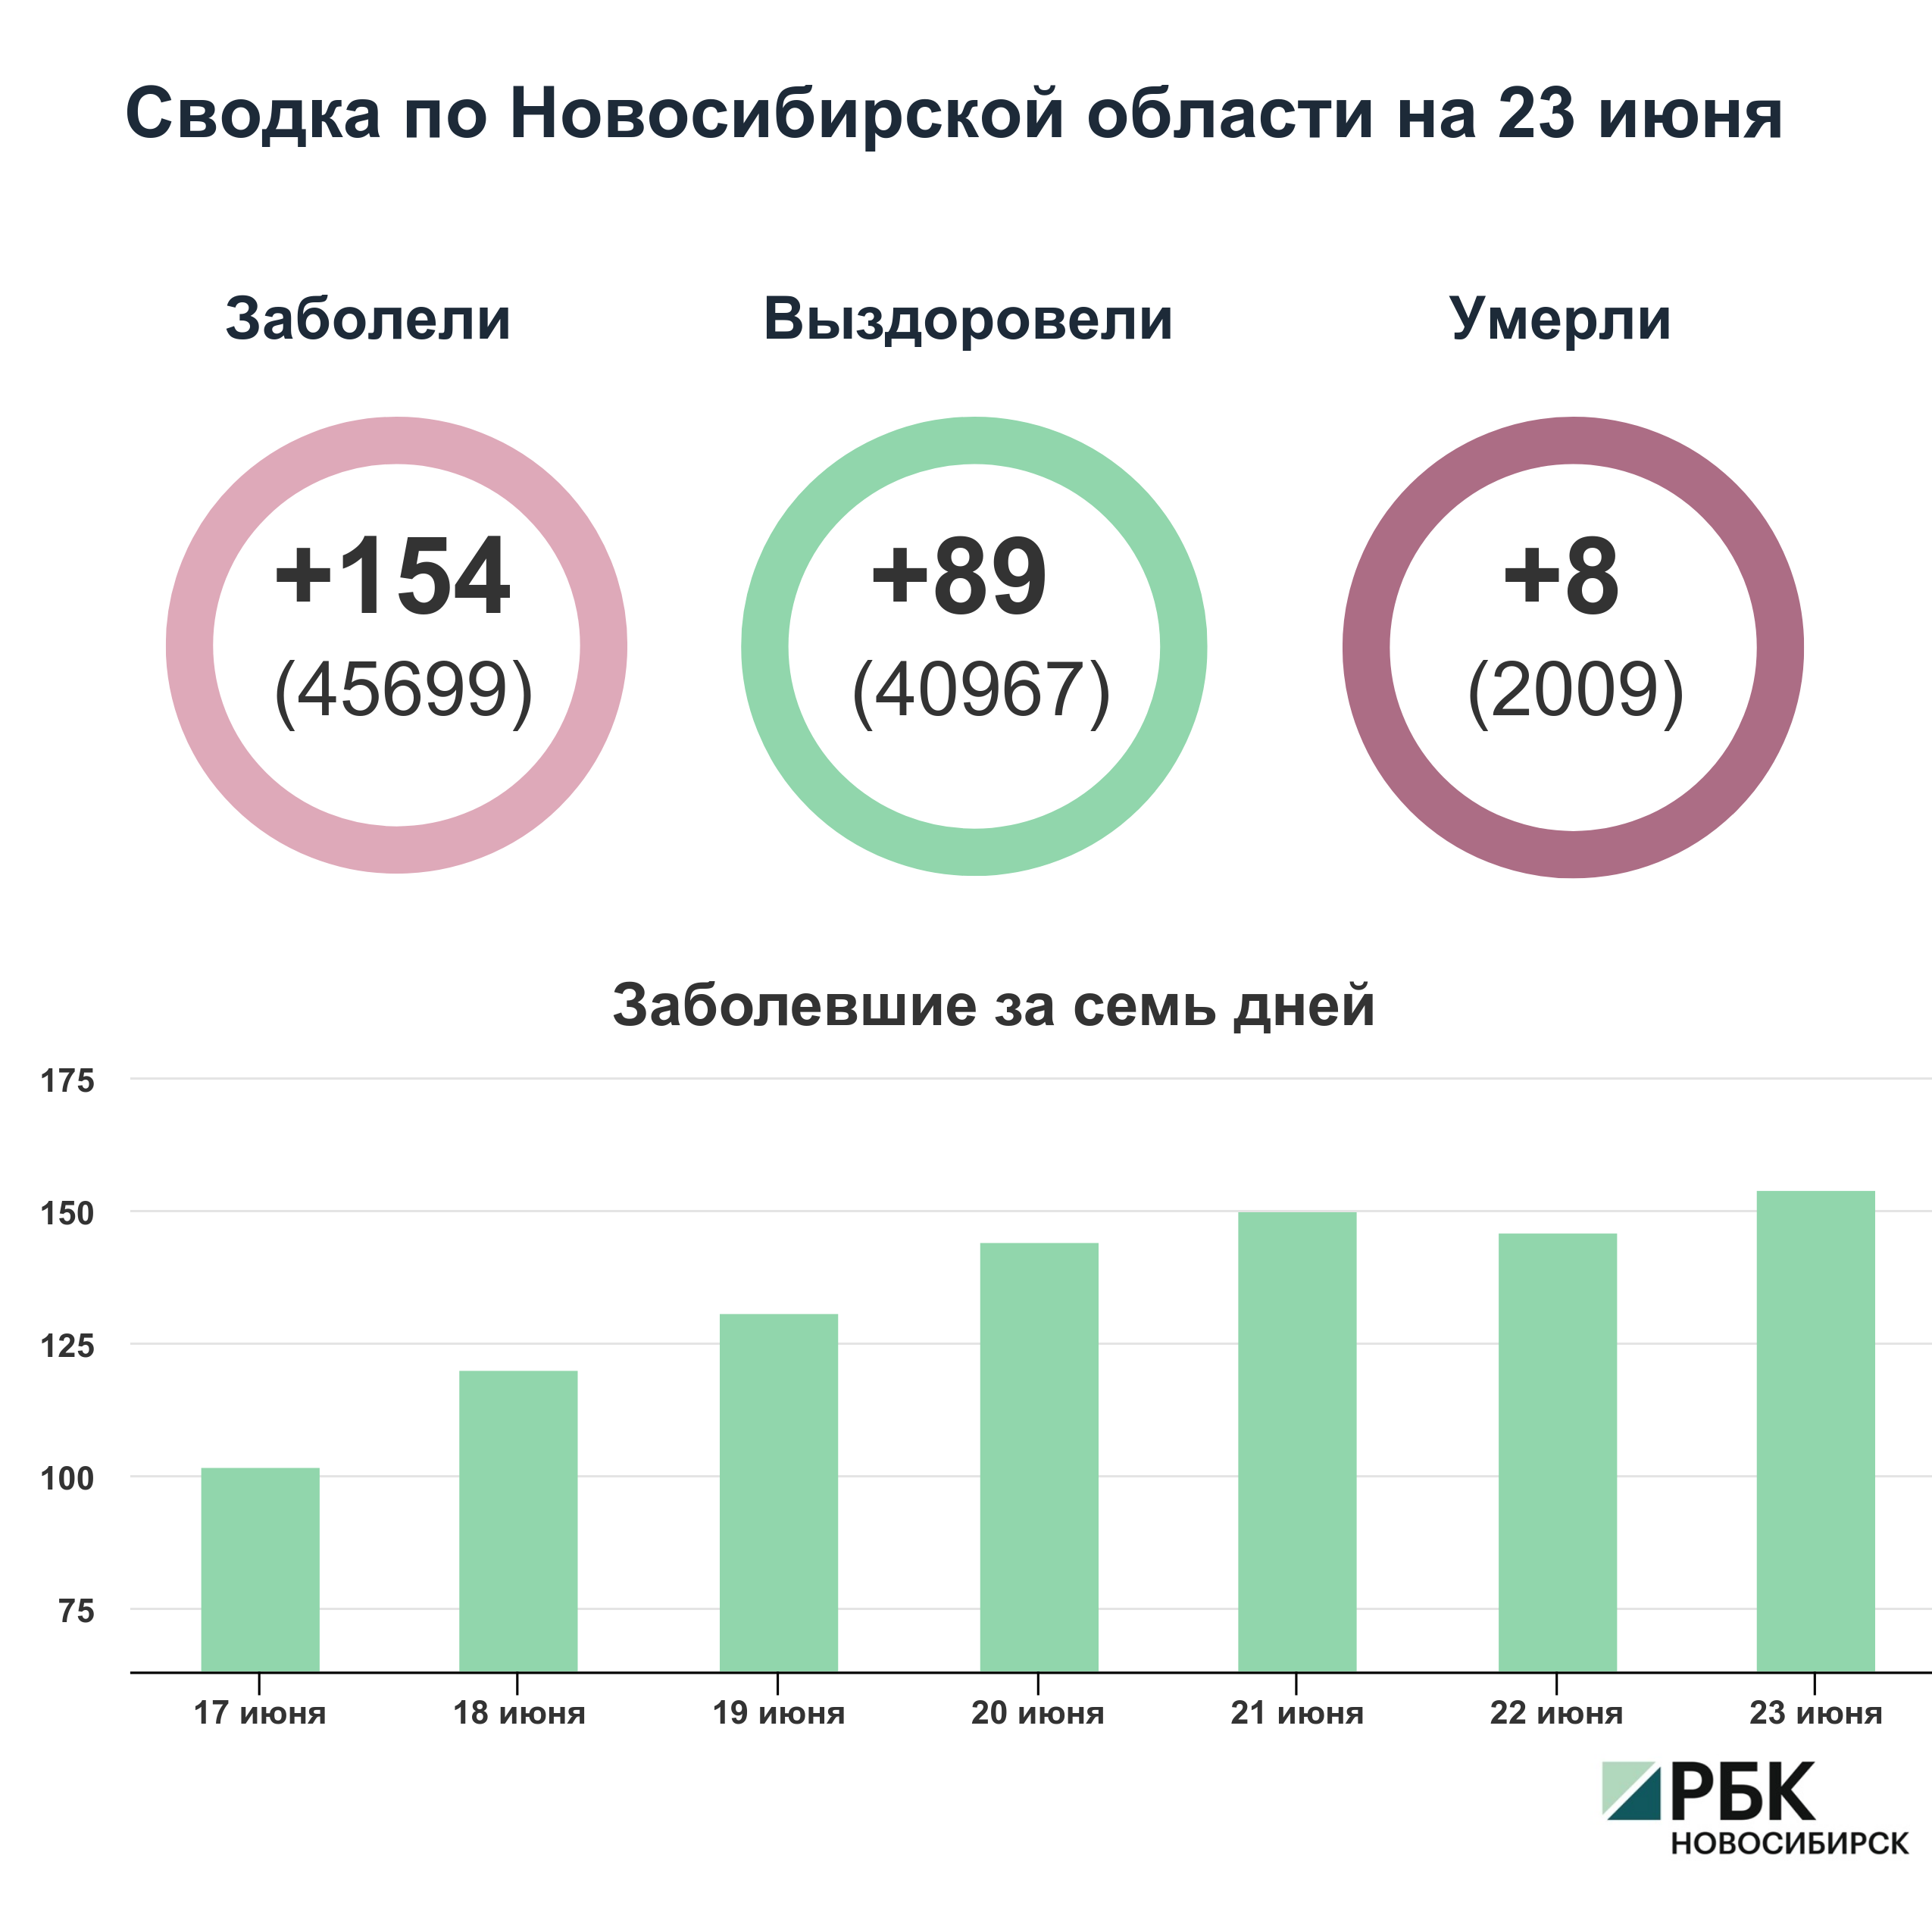 Коронавирус в Новосибирске: сводка на 23 июня